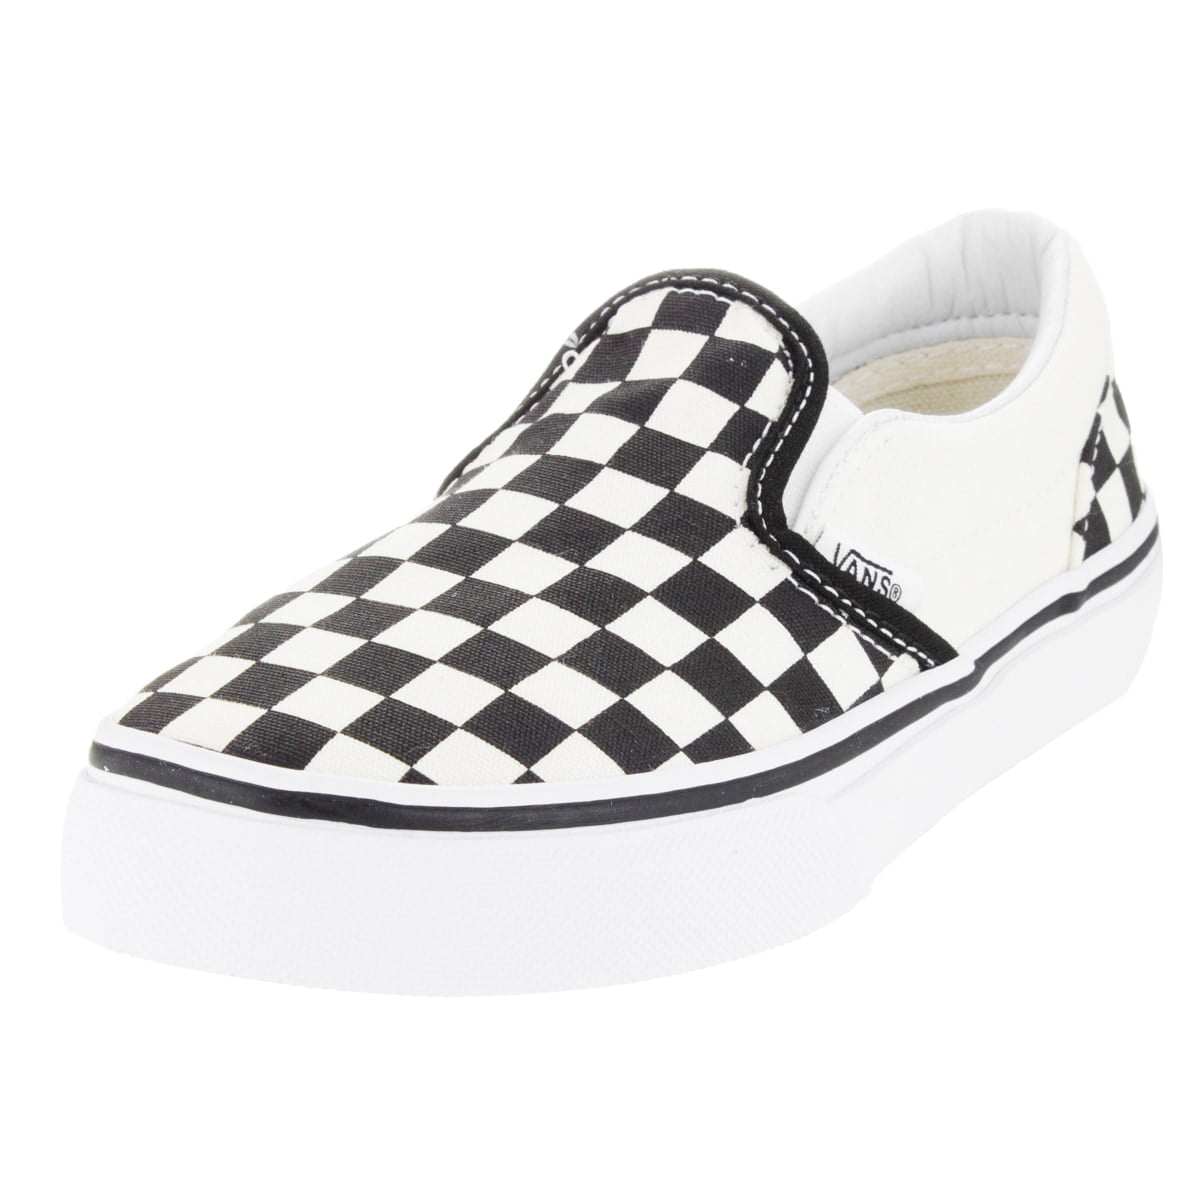 Vans Kids Classic Slip-On (Checkerboard) Black/True White 